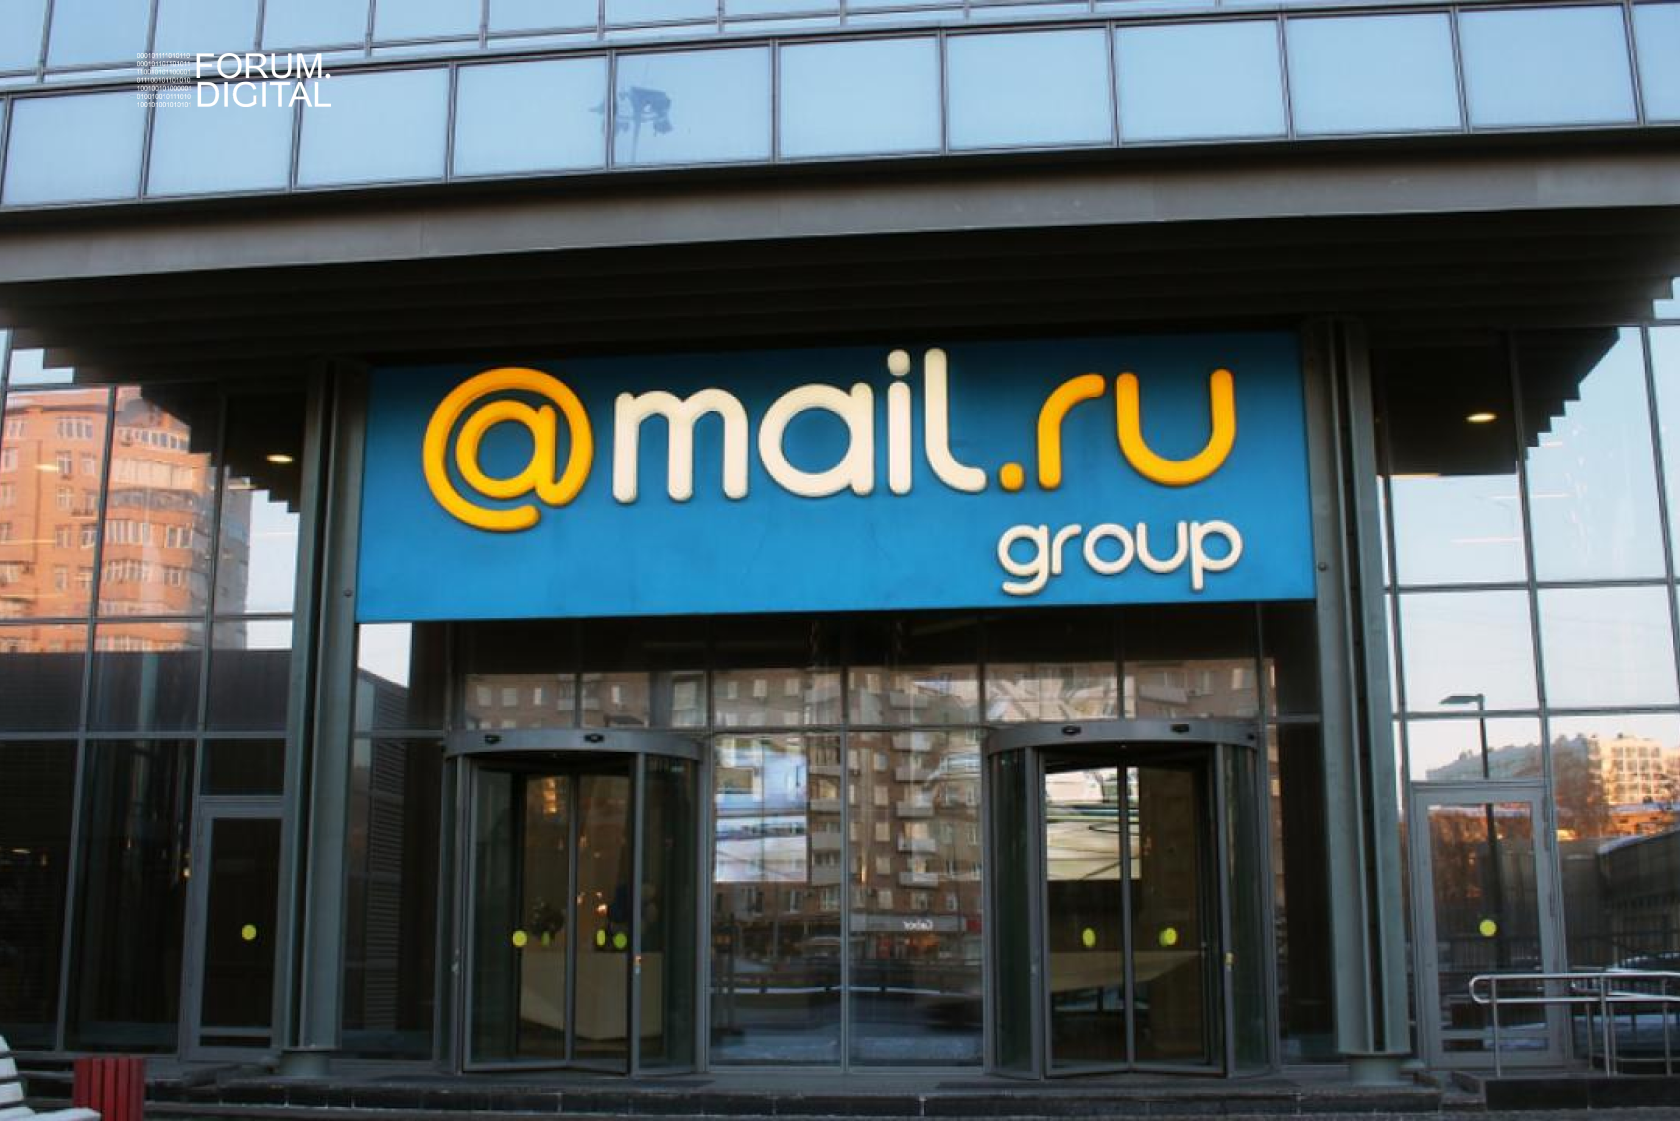 Офис mail.ru. Mail Group офис. Mail Group офис в Москве. Офис маил в Москве. Mail ru адрес офиса